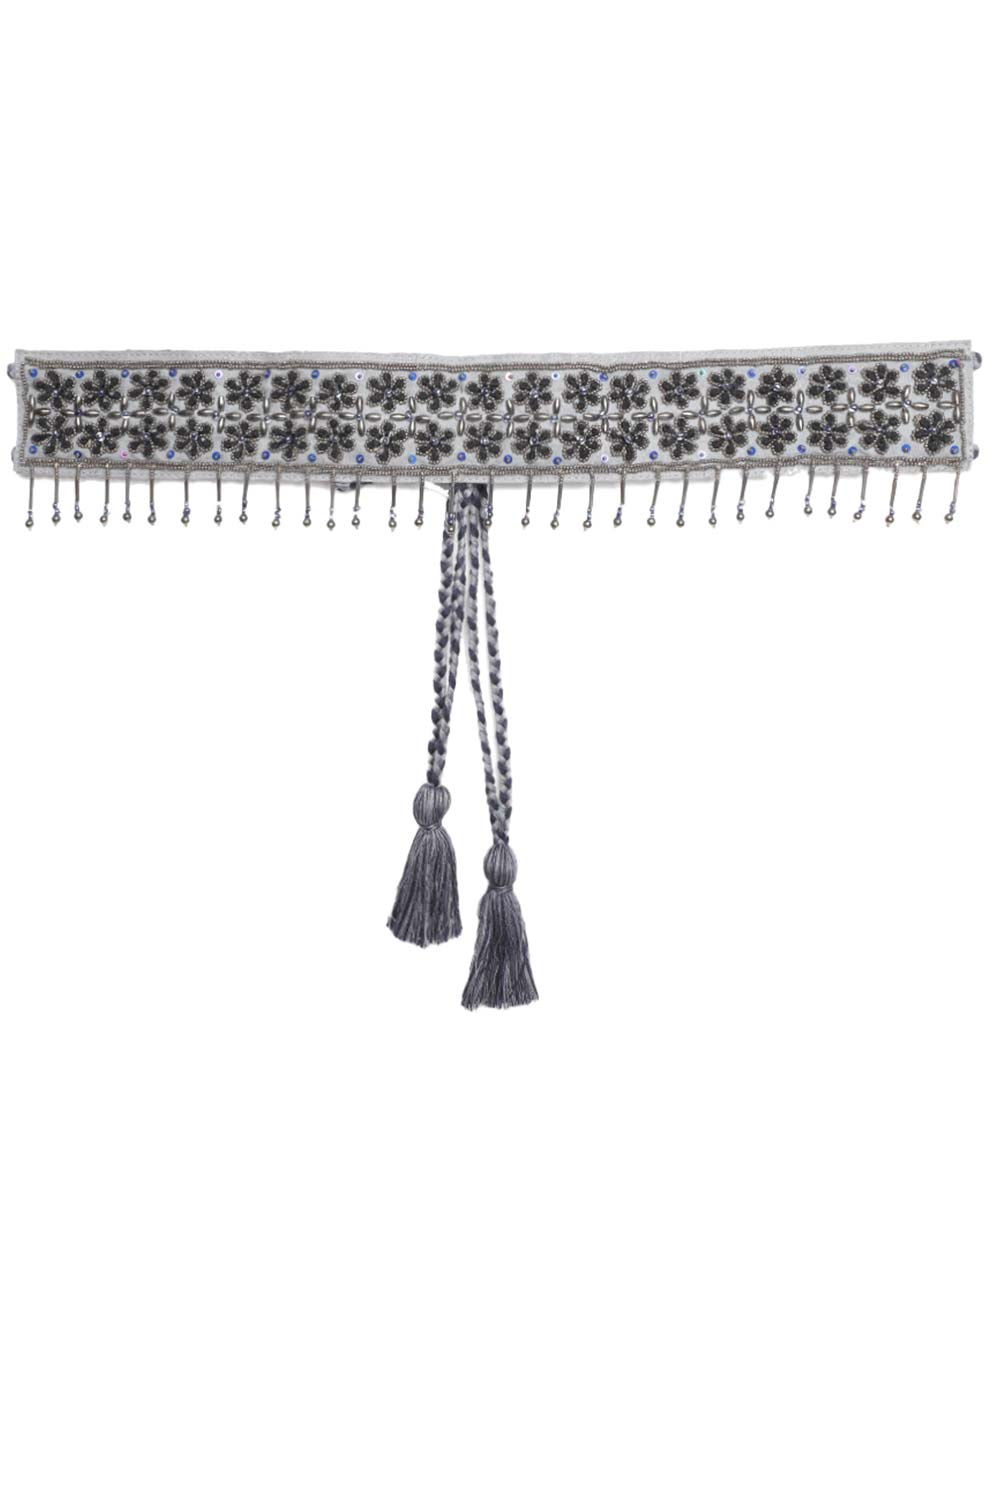 Buy Floral Bead Work Saree Belt in Grey & Black Online - One Minute Saree